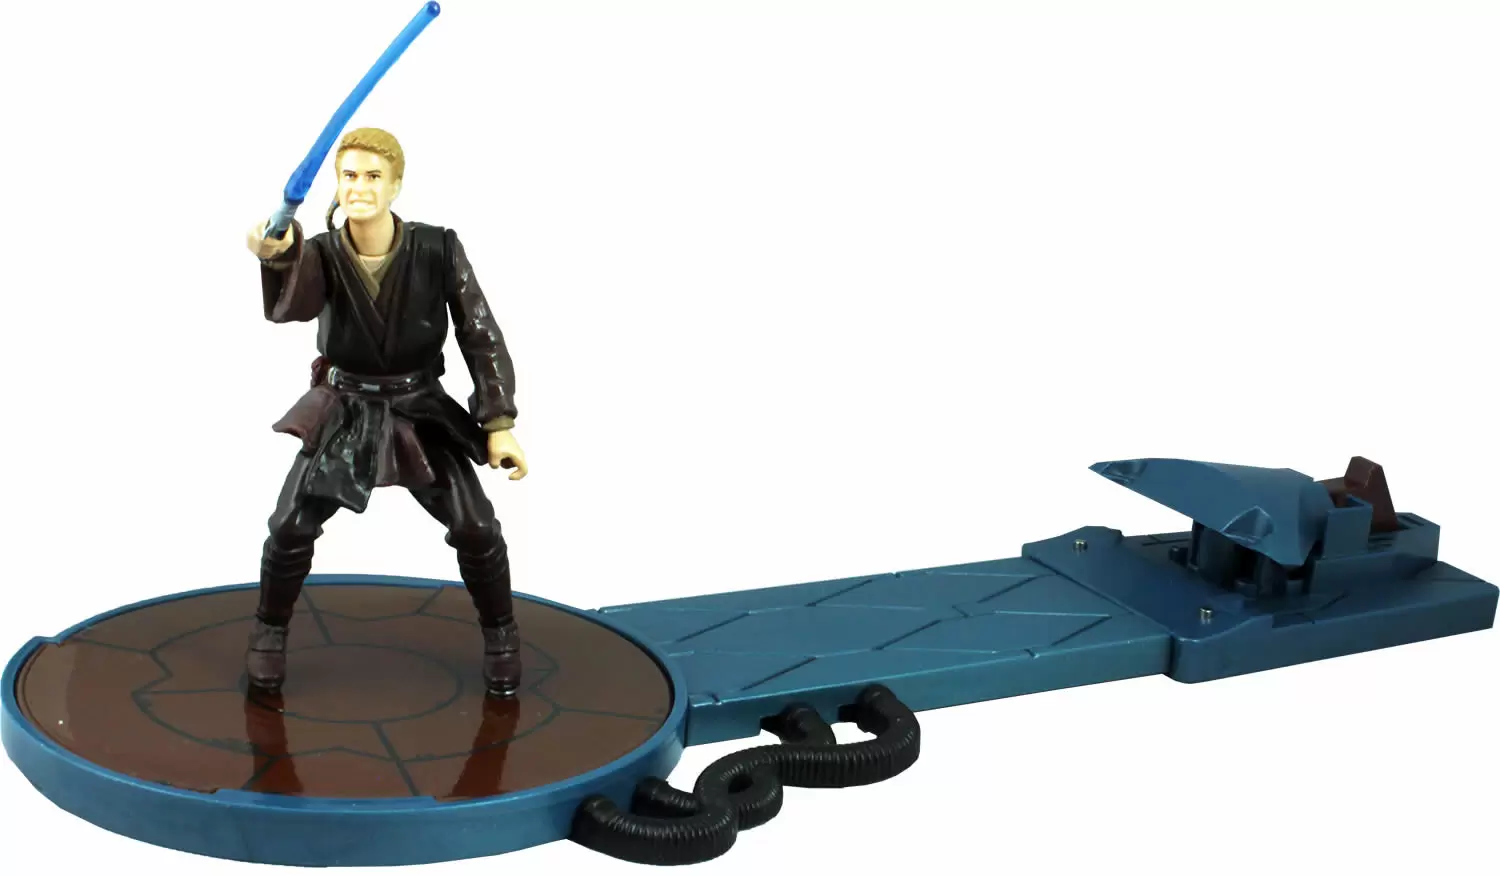 Star Wars SAGA - Anakin Skywalker with Force Flipping Action